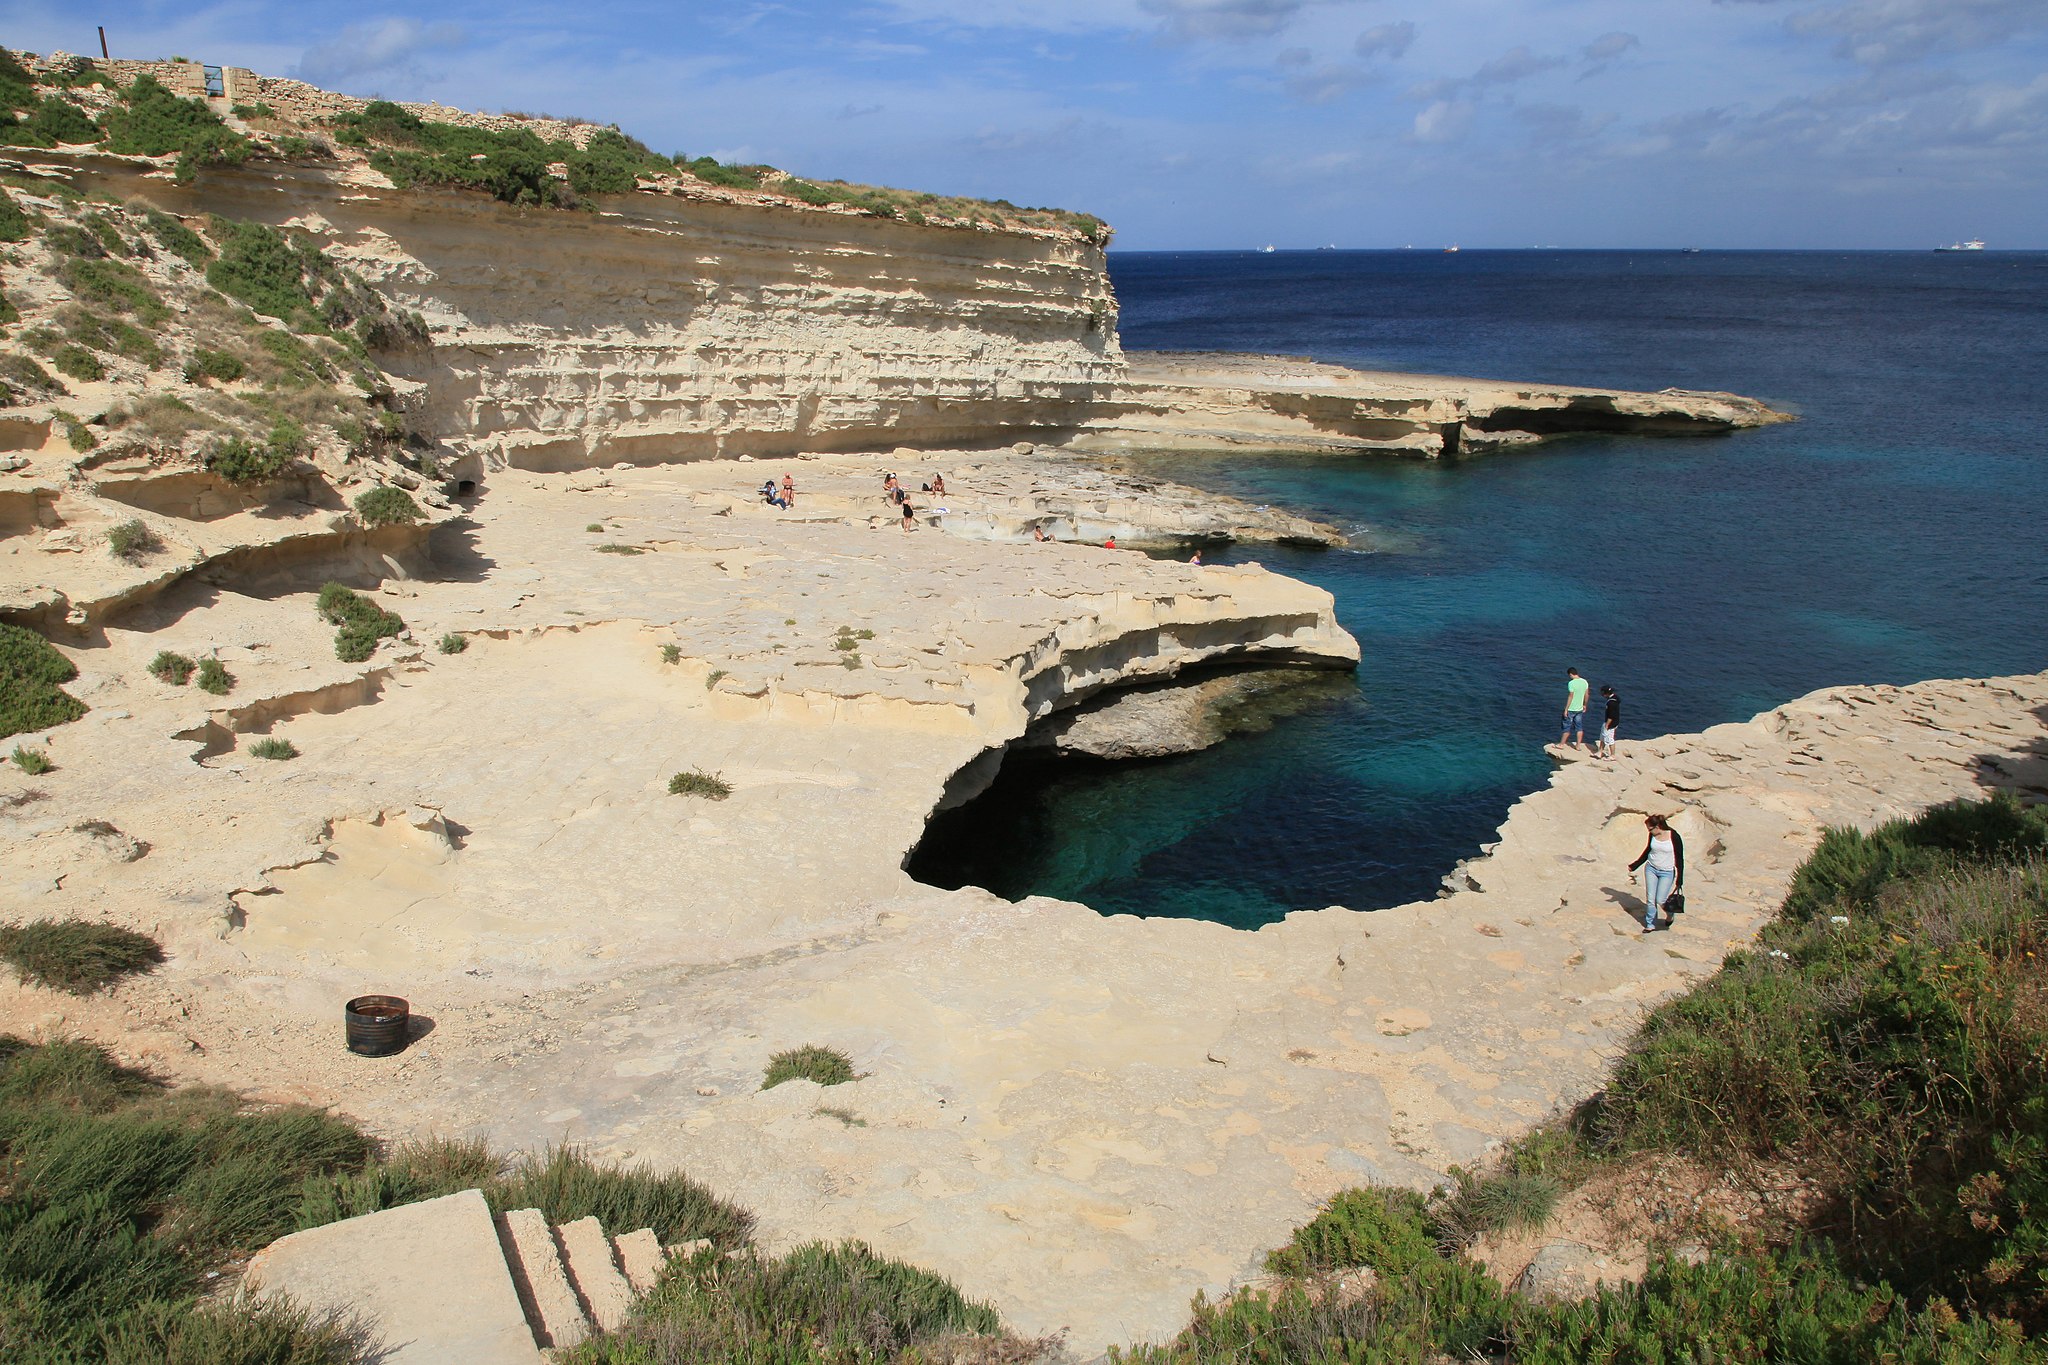 Pools in Malta